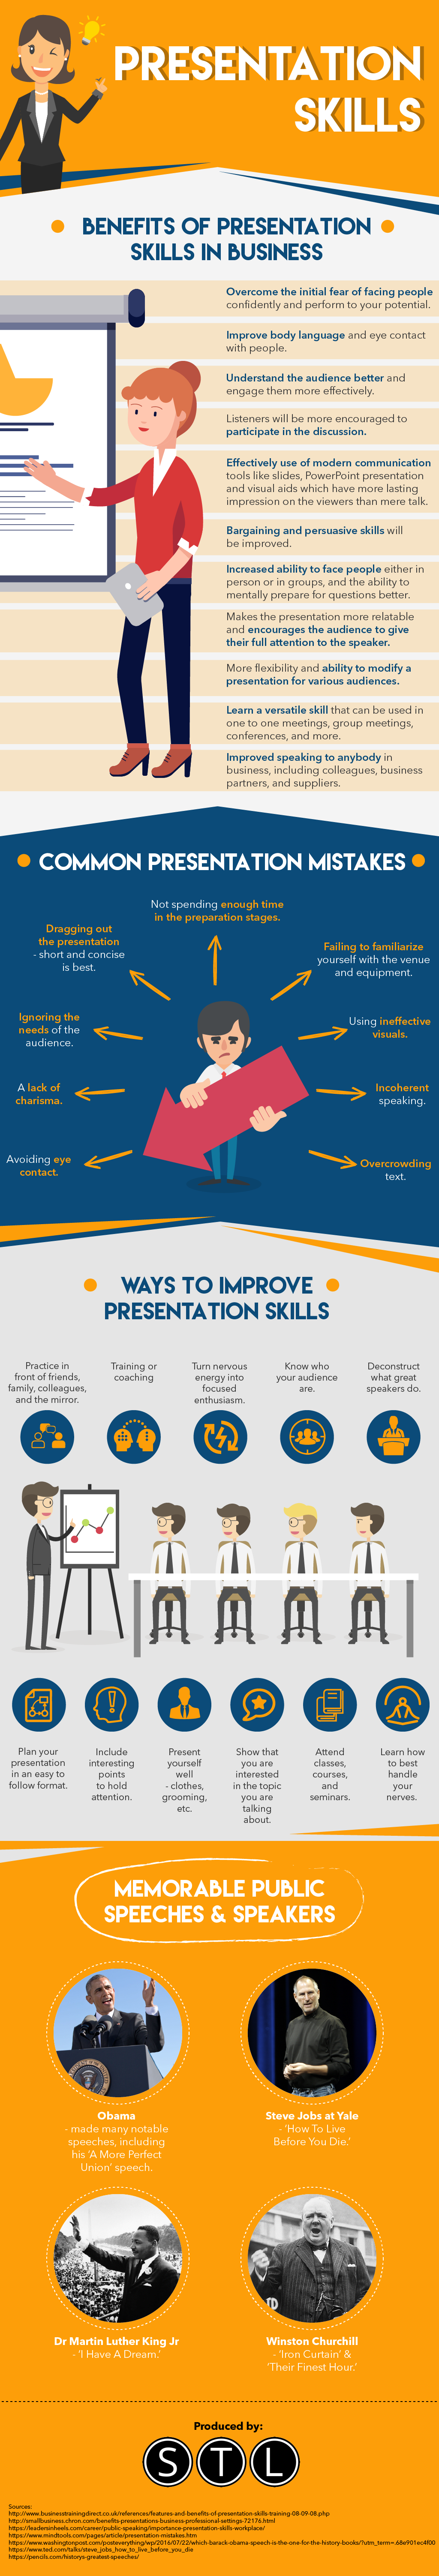 presentation skills in corporate